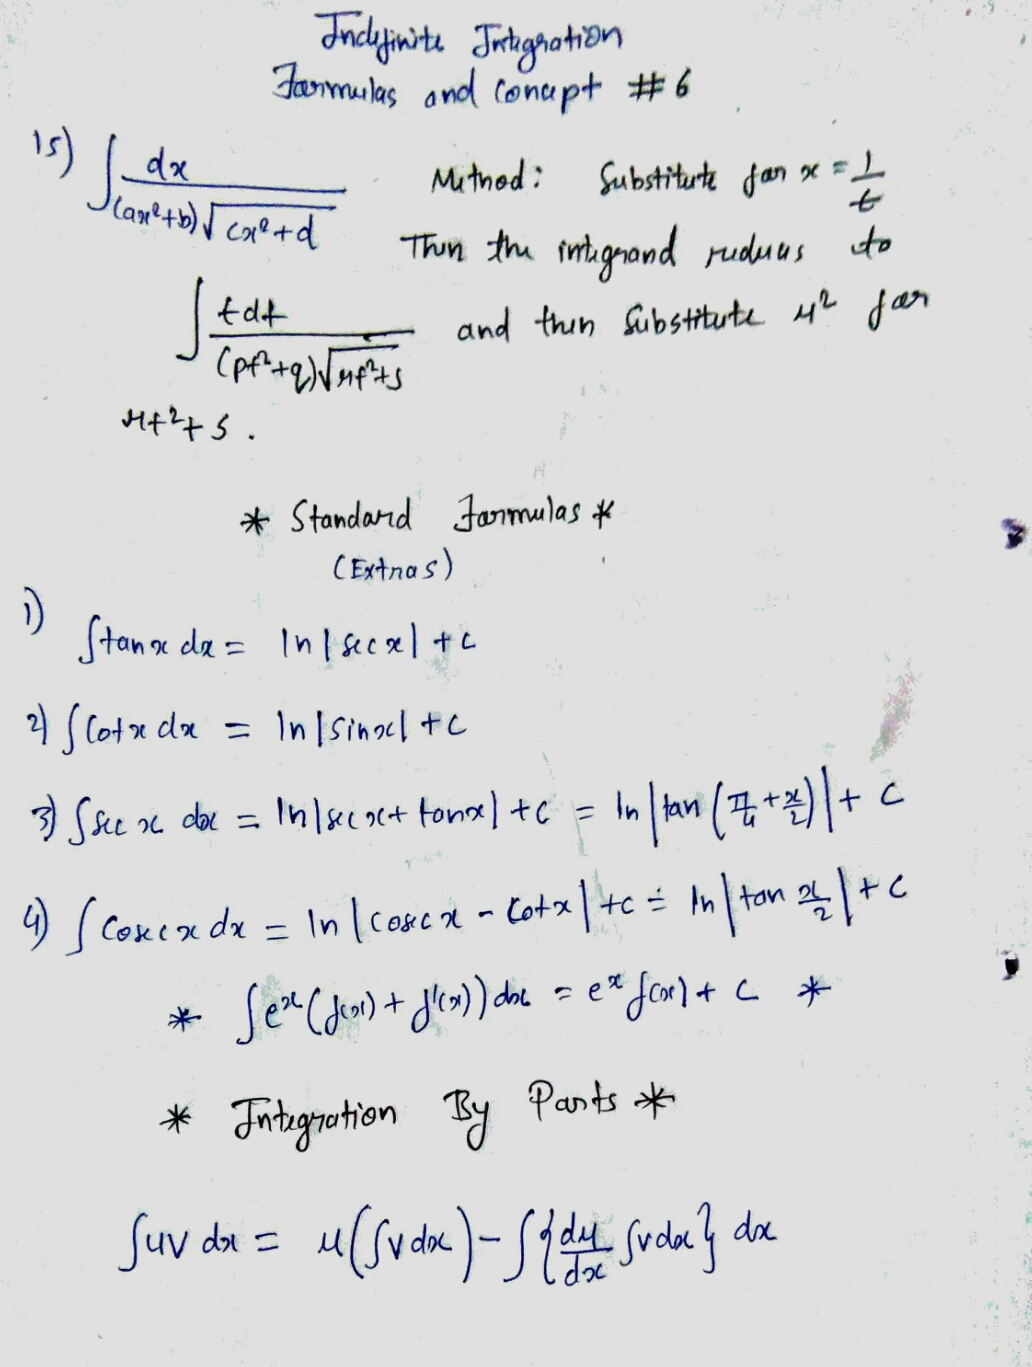 Indefinite Integration Formulas and Concepts